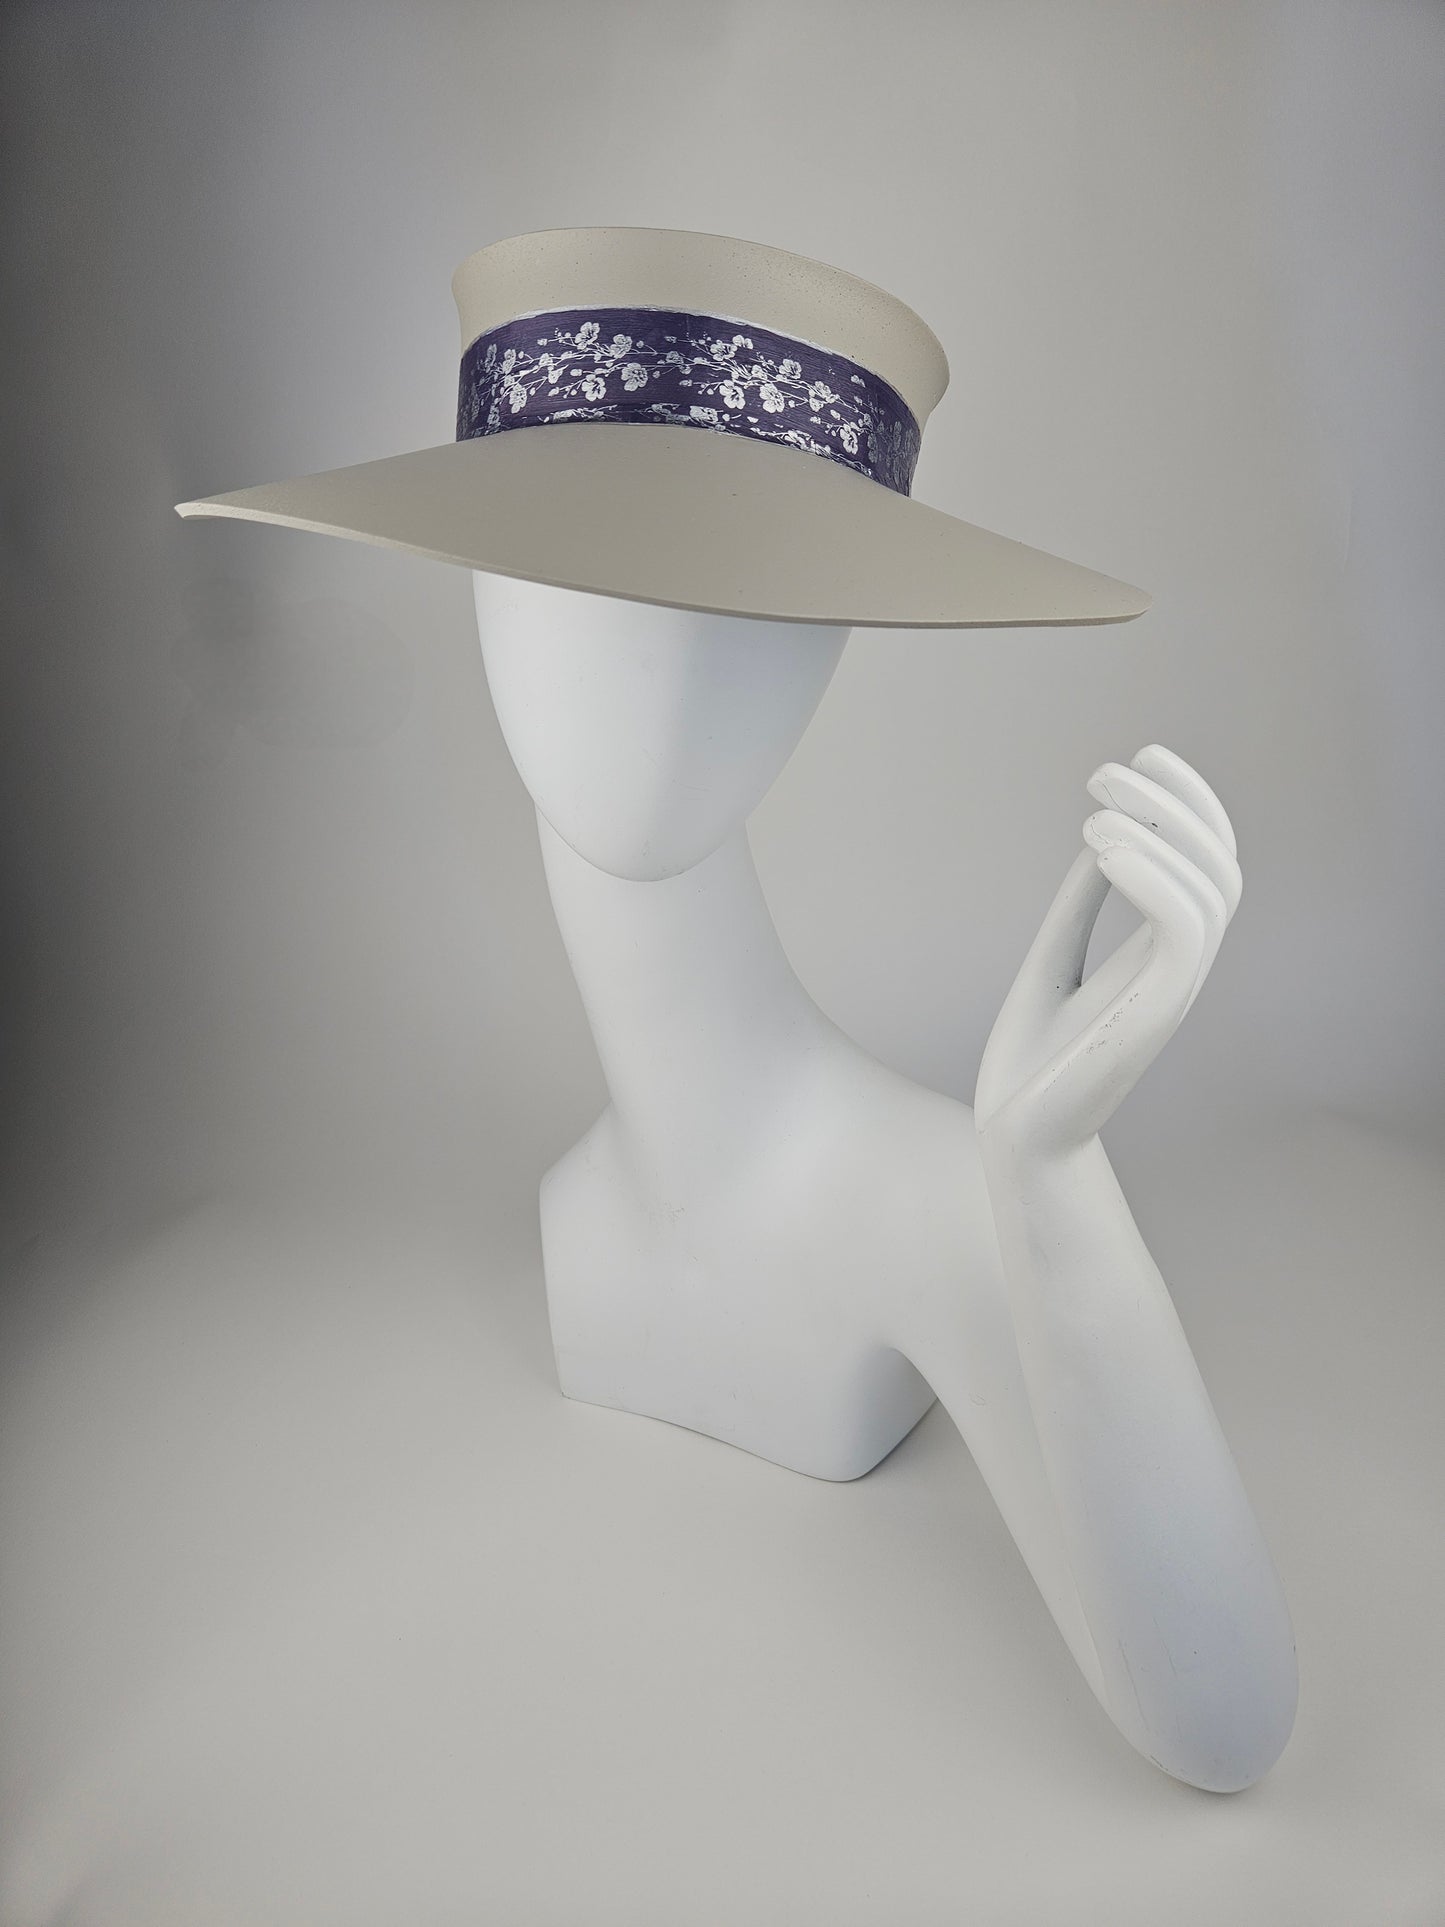 Gorgeous Gray Beige Audrey Foam Sun Visor Hat with Blue Purple Silver Floral Band: Tea, Walks, Brunch, Fancy, Golf, Summer, Church, No Headache, Pool